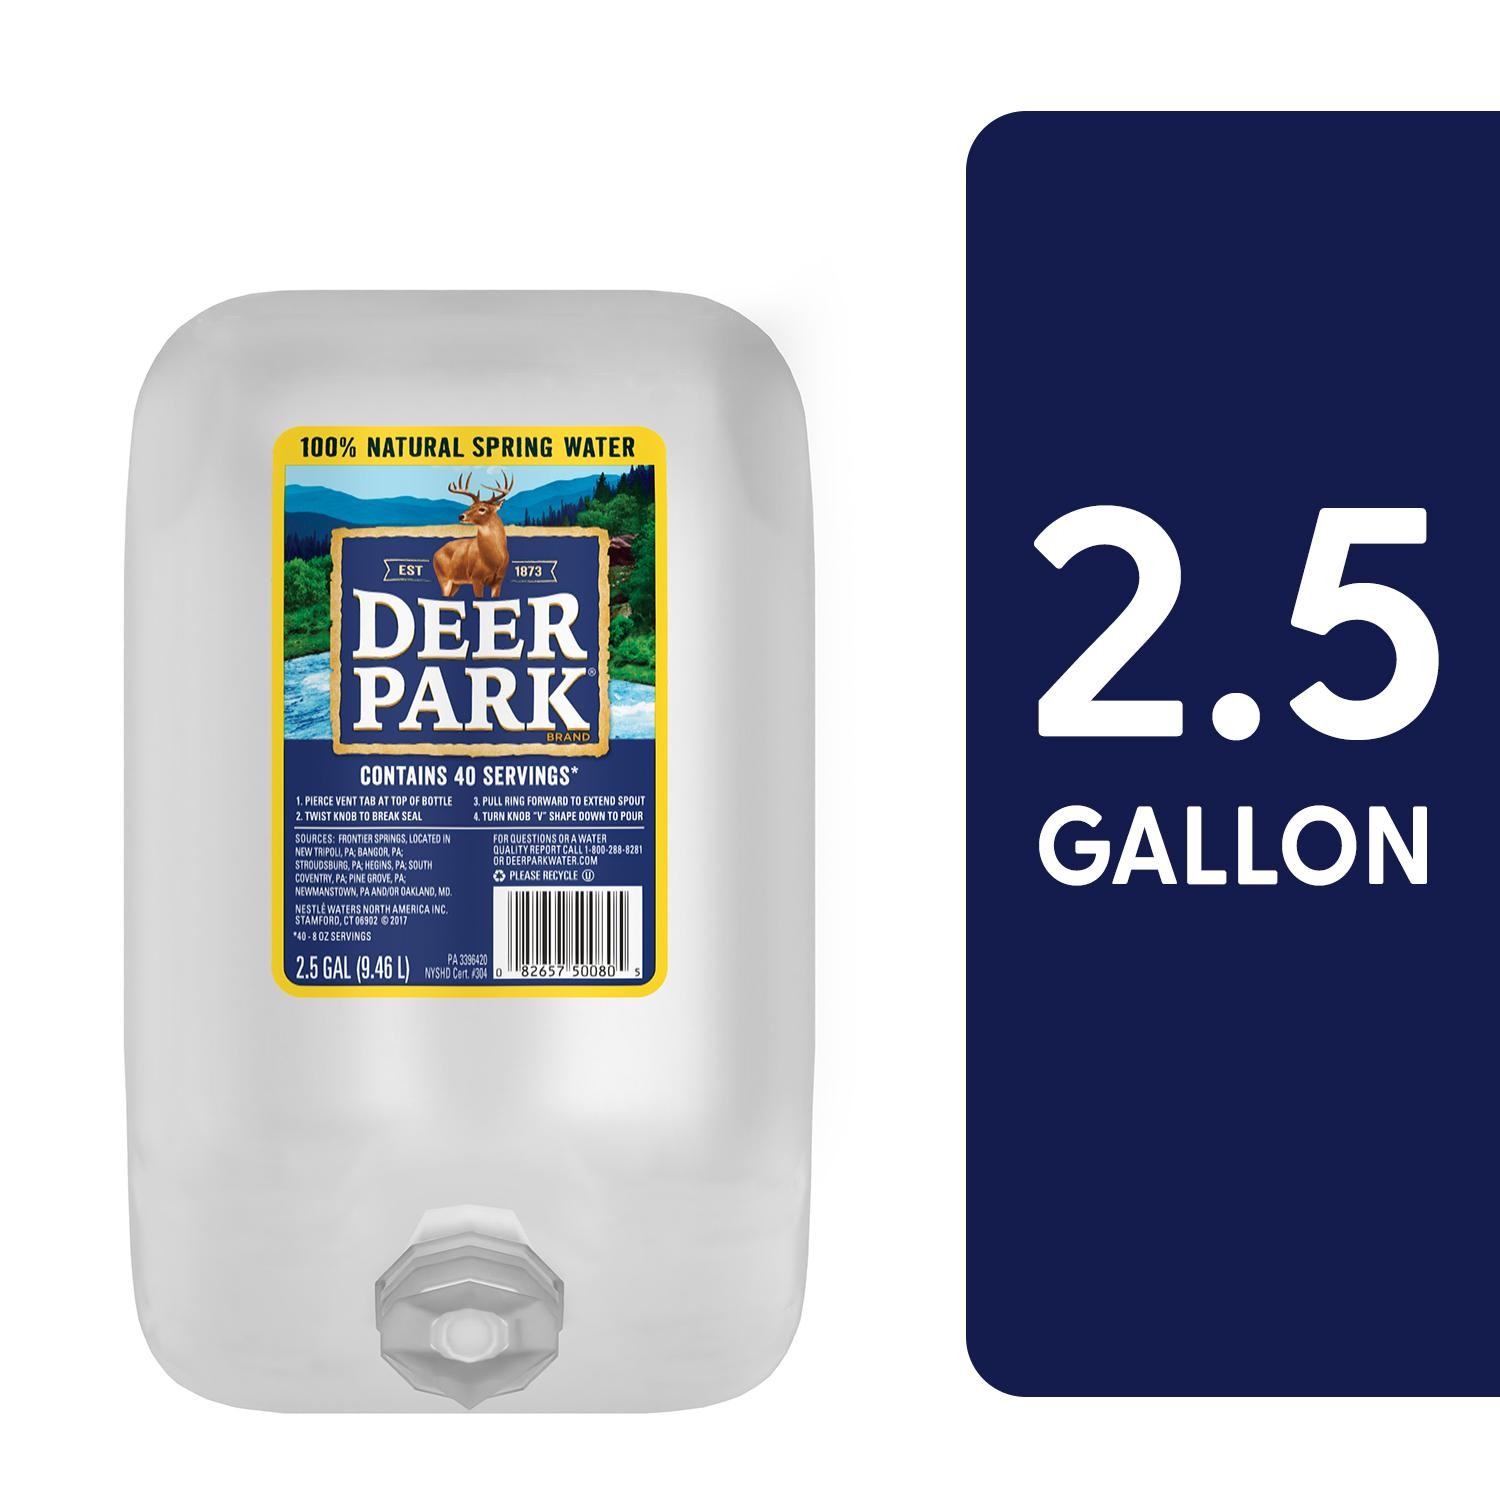 Deer Park Brand 100% Natural Spring Water Jug - 2.5 Gallon